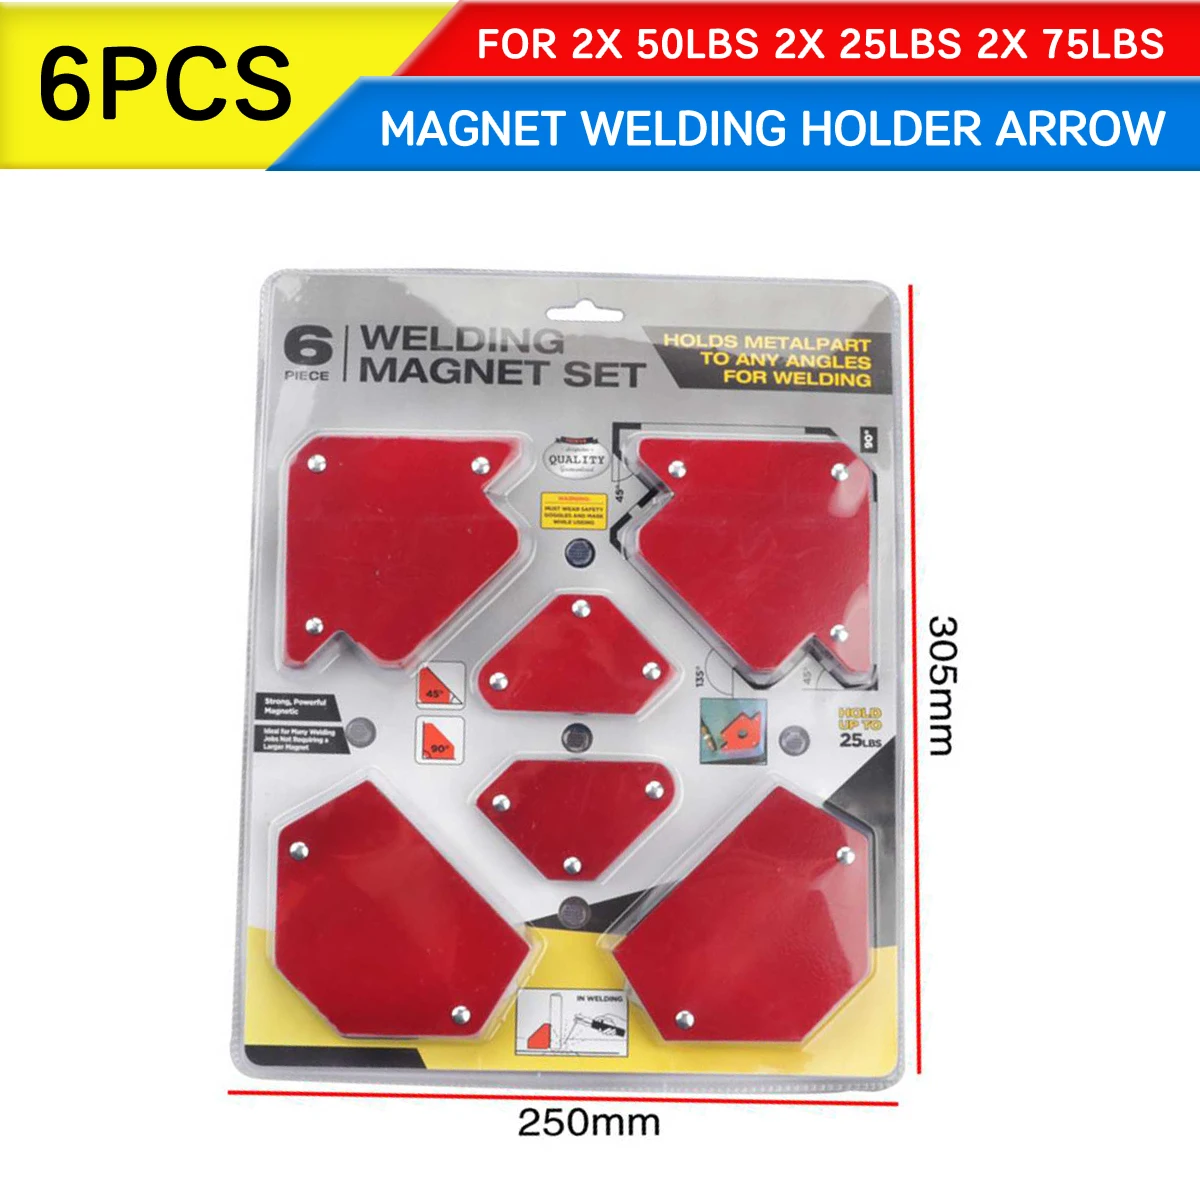 

6pcs Magnet Welding Holder Arrow Multi-angle Magnetic Clamp For Welding Magnet 2x 50lbs 2x 25lbs 2x 75lbs Mig Tools